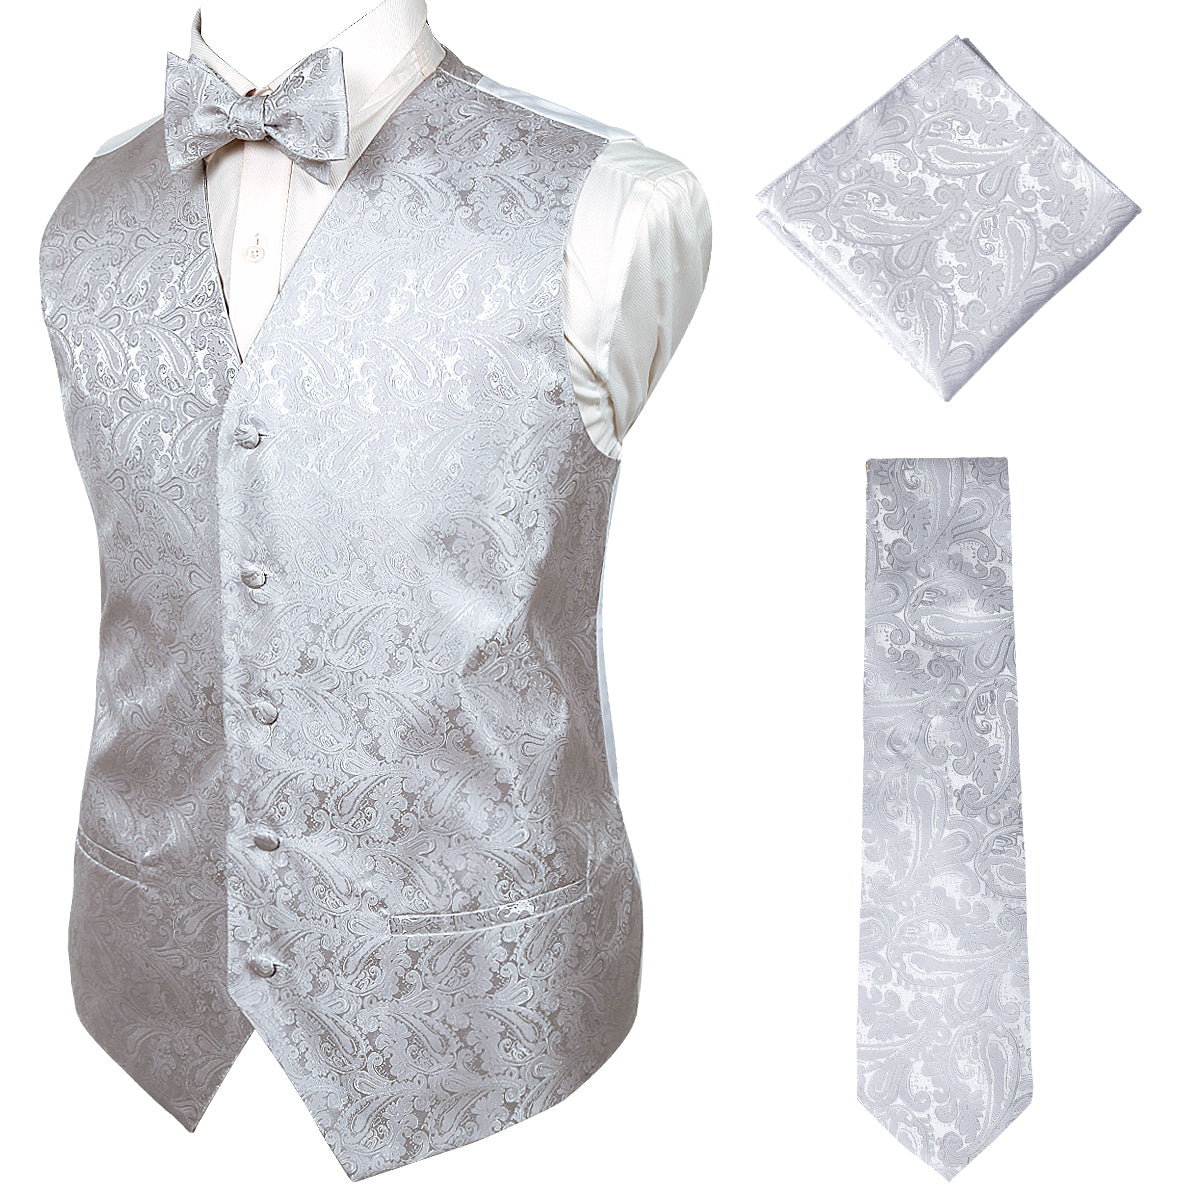 Men's Paisley Suit Vest, Self-tied Bow Tie, 3.35inch(8.5cm) Necktie and Pocket Square Set, 175-Silver